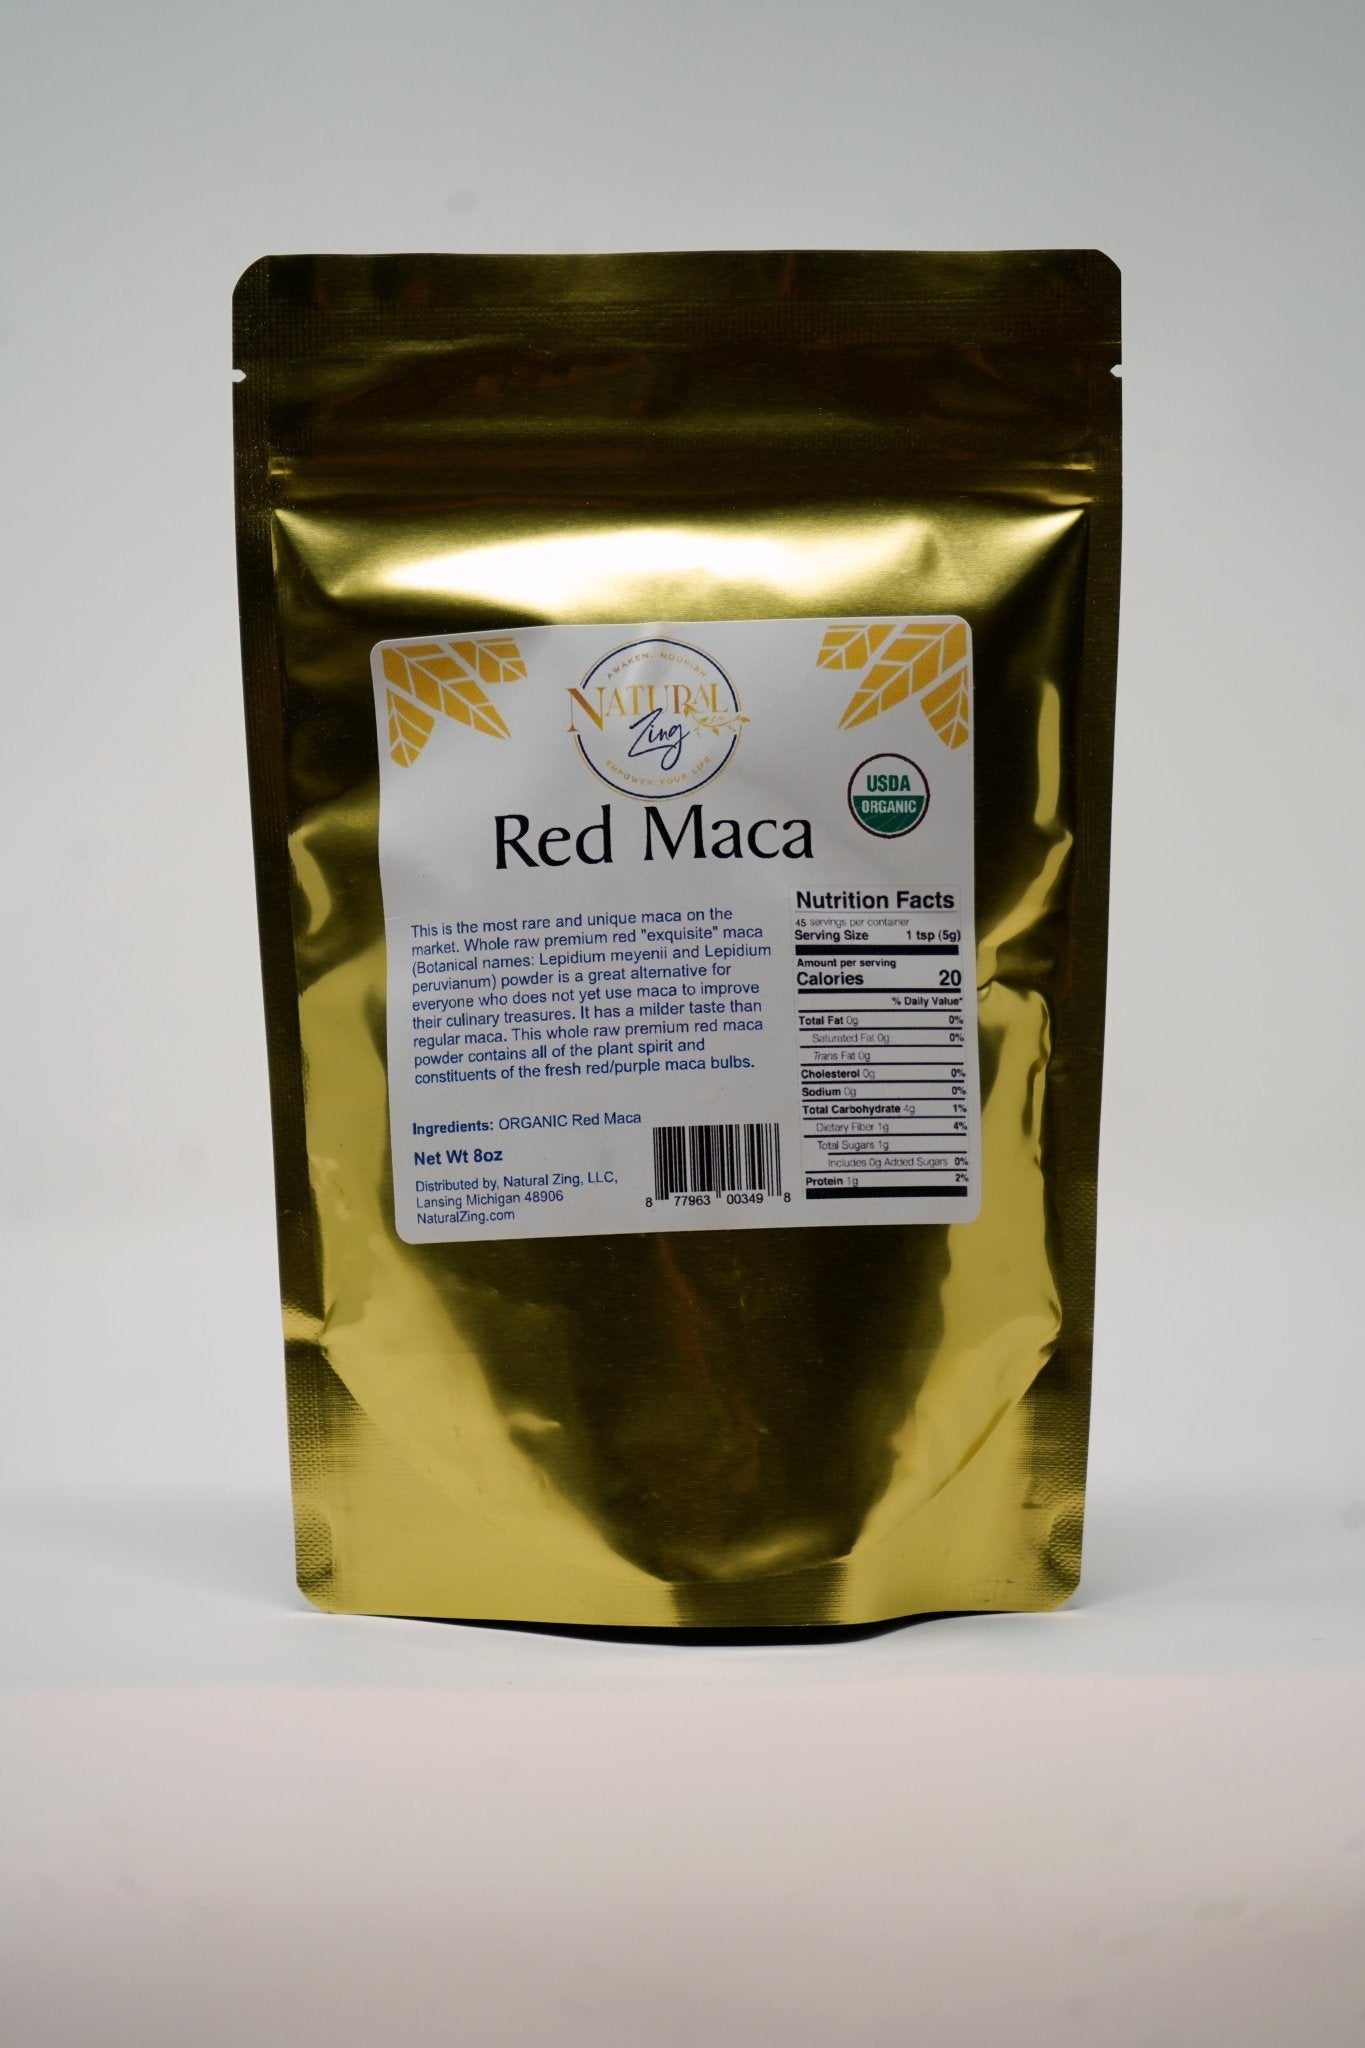 Red Maca 8 oz - Natural Zing